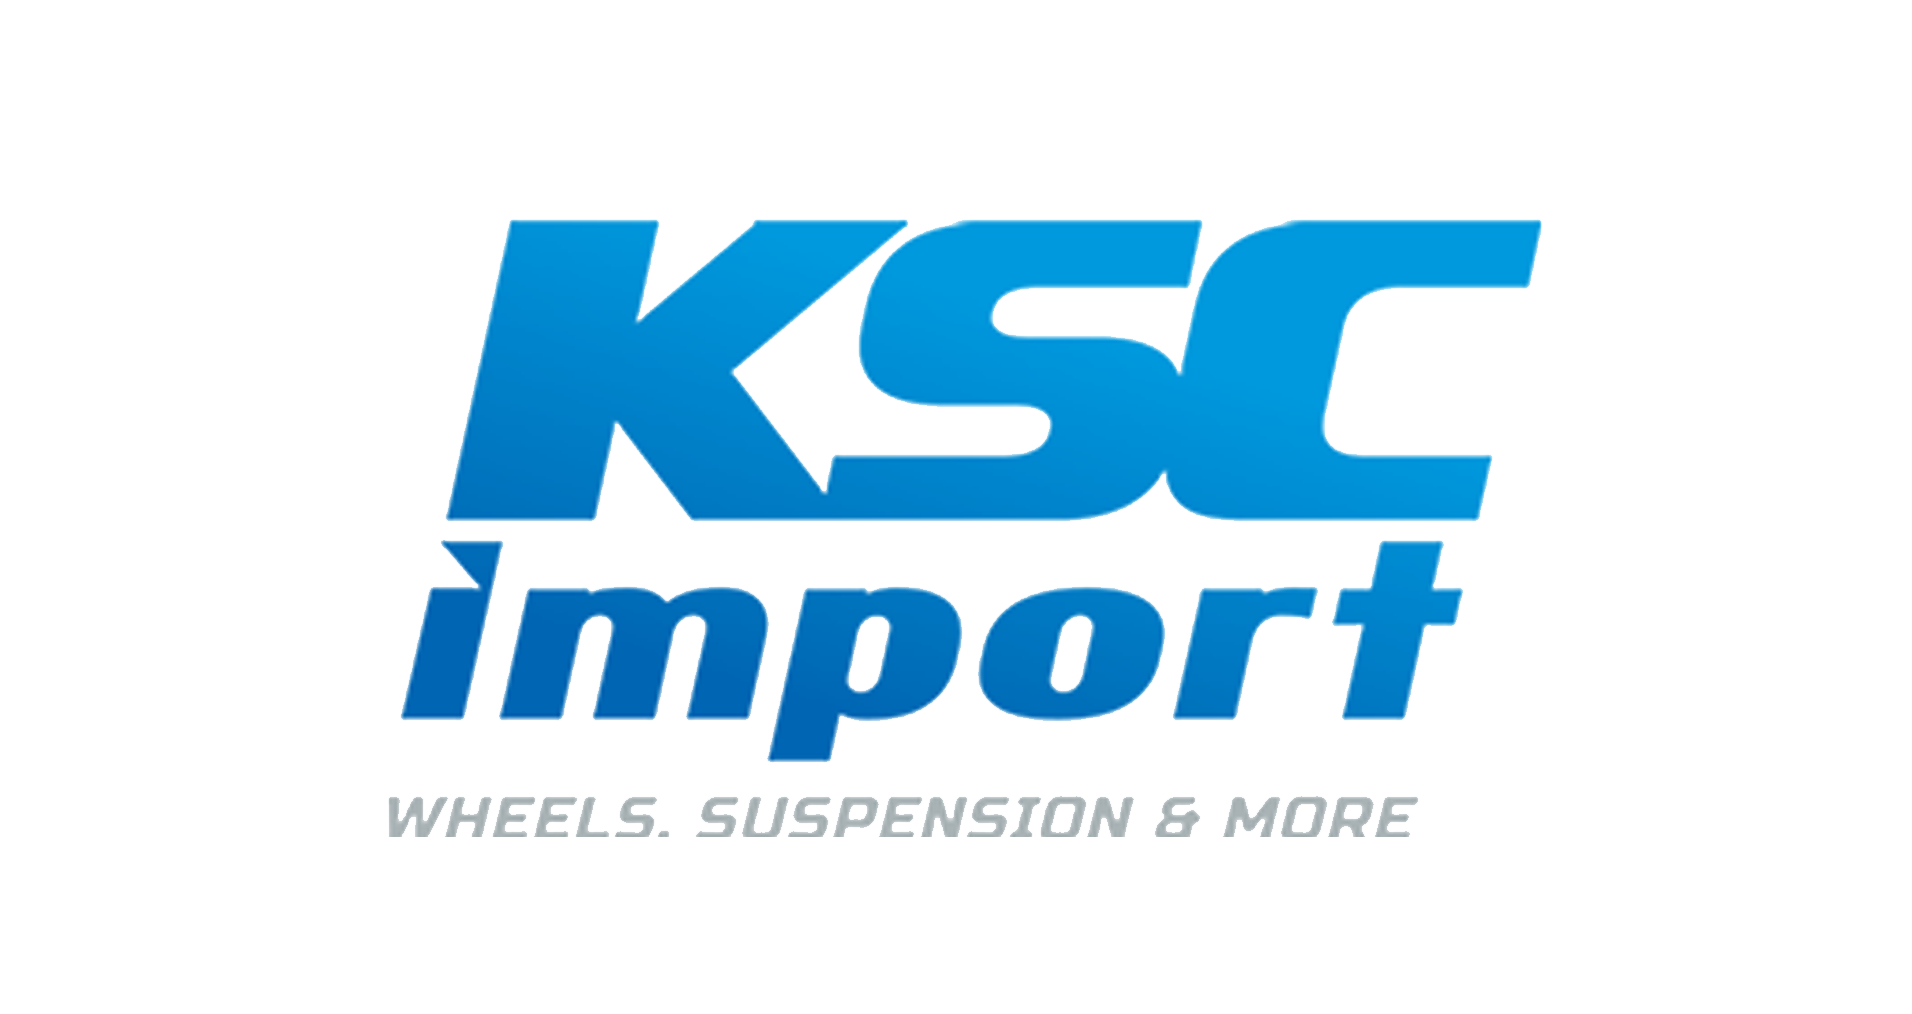 KSC import